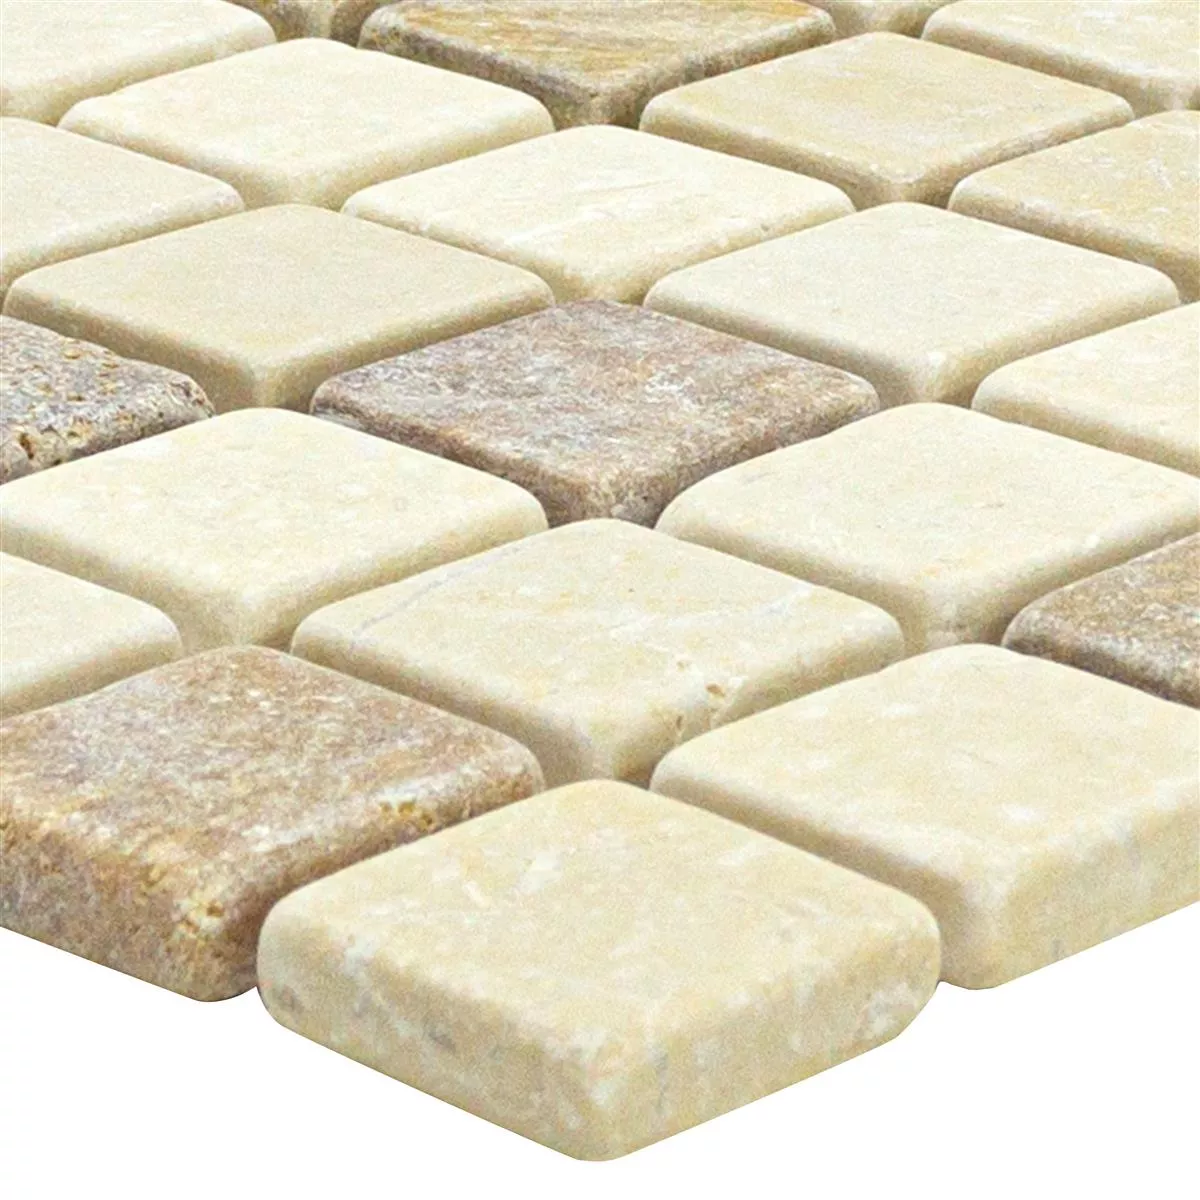 Sample Marble Natural Stone Mosaic Tiles Lorentes Light Brown Mix